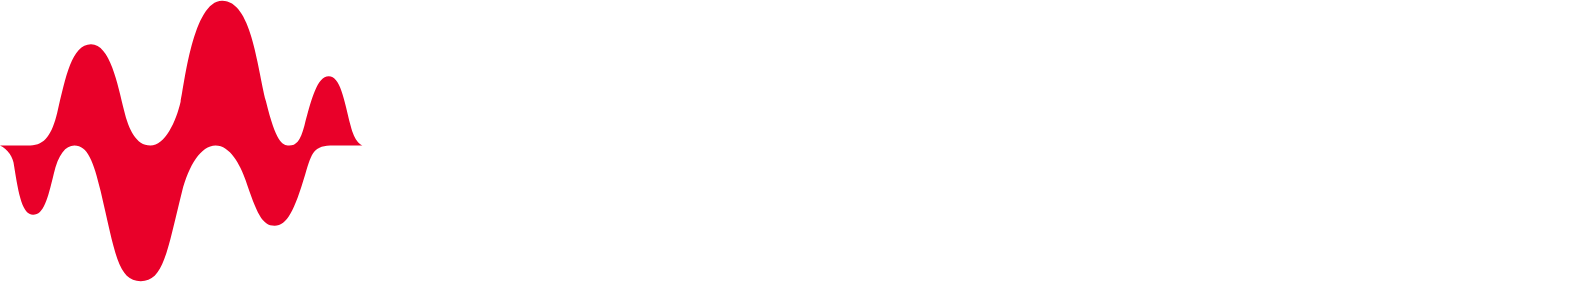 Keysight Logo groß für dunkle Hintergründe (transparentes PNG)